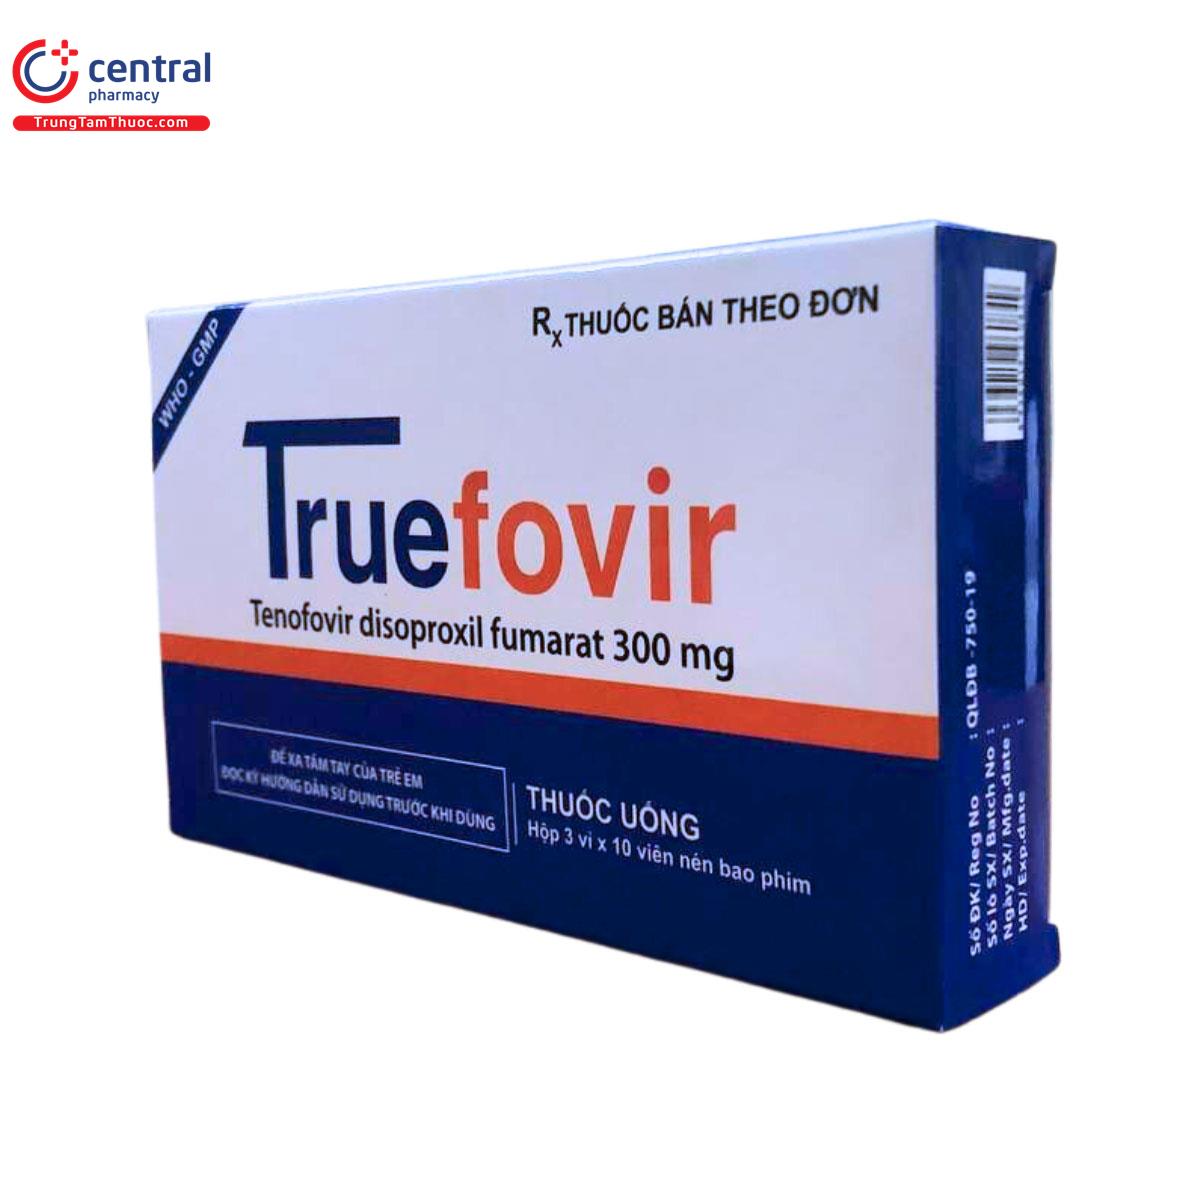 truefovir anh 2 S7538